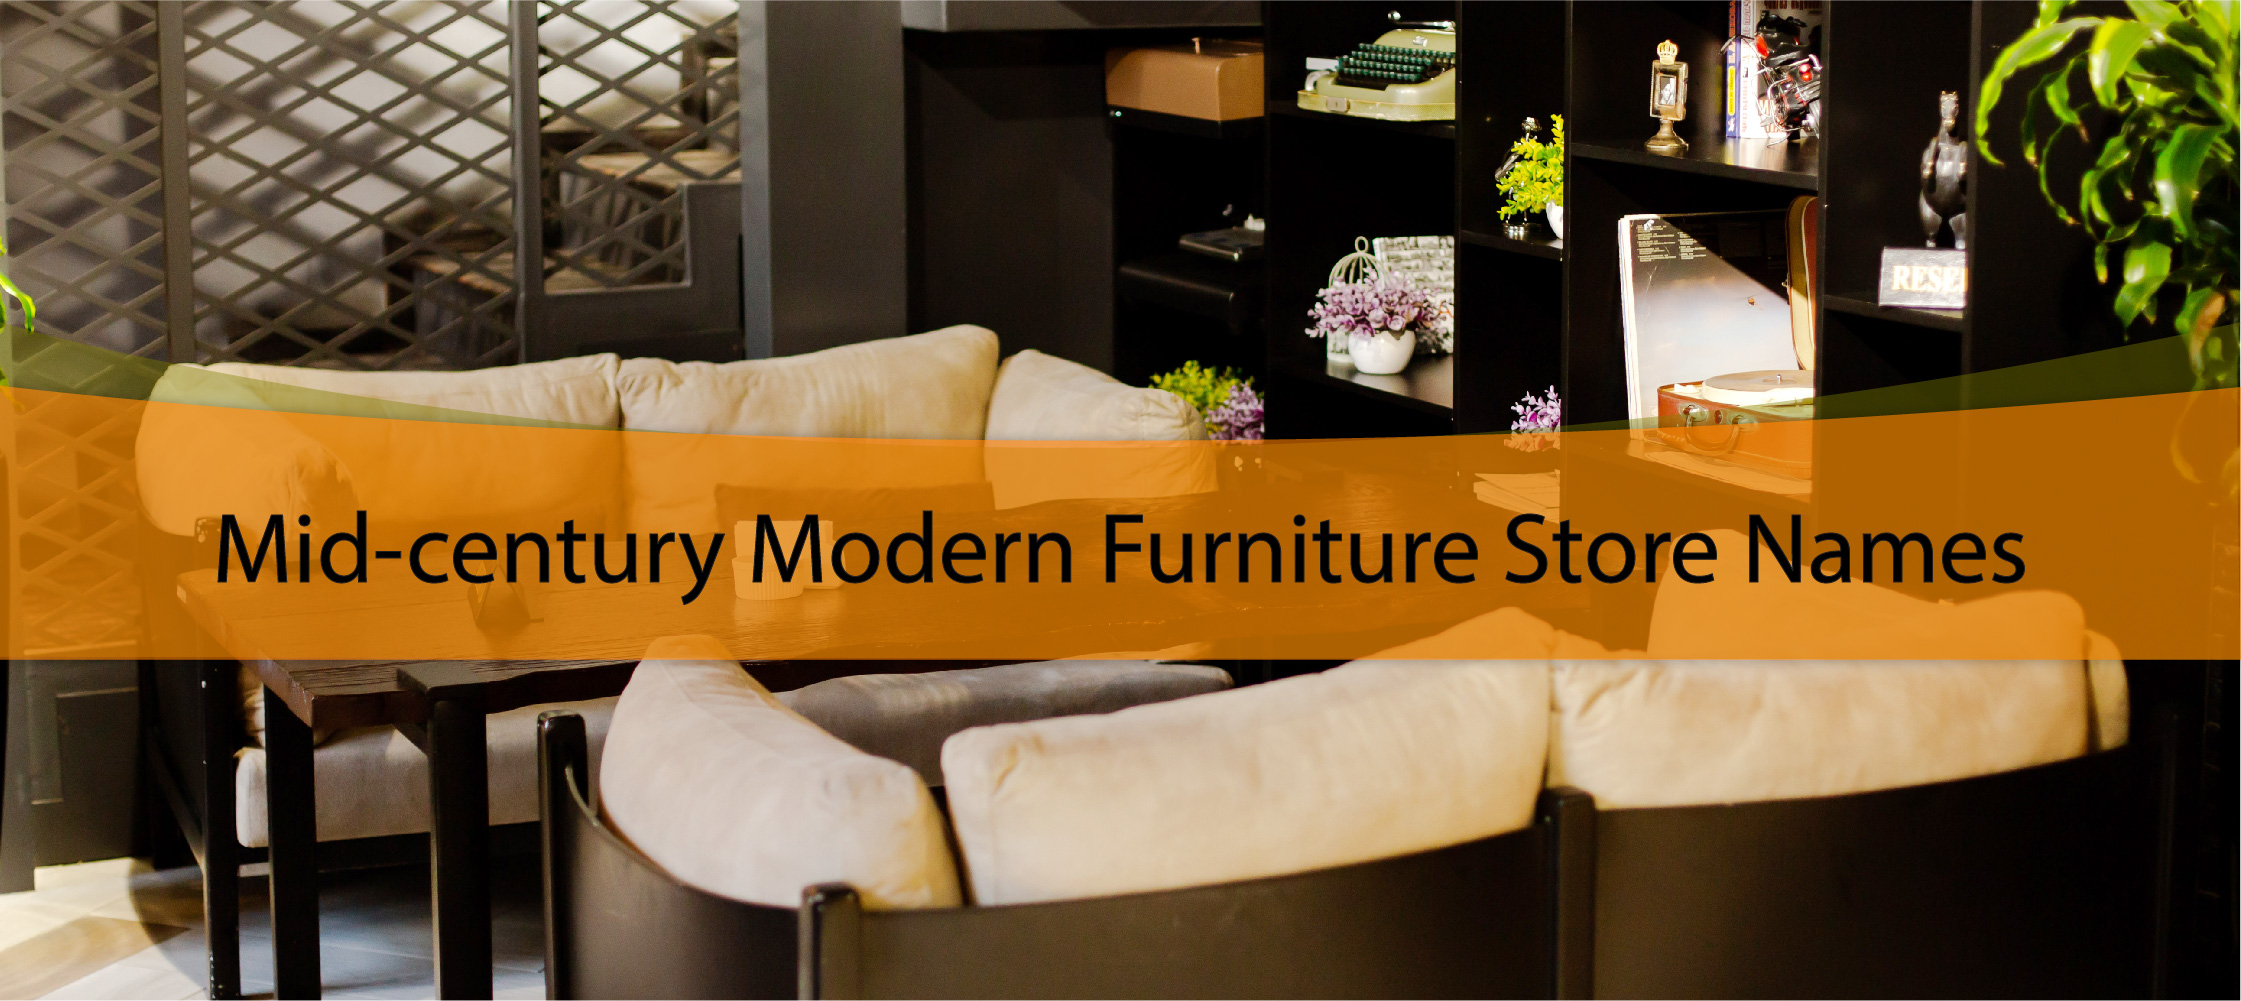 Mid-century Modern Furniture Store Names